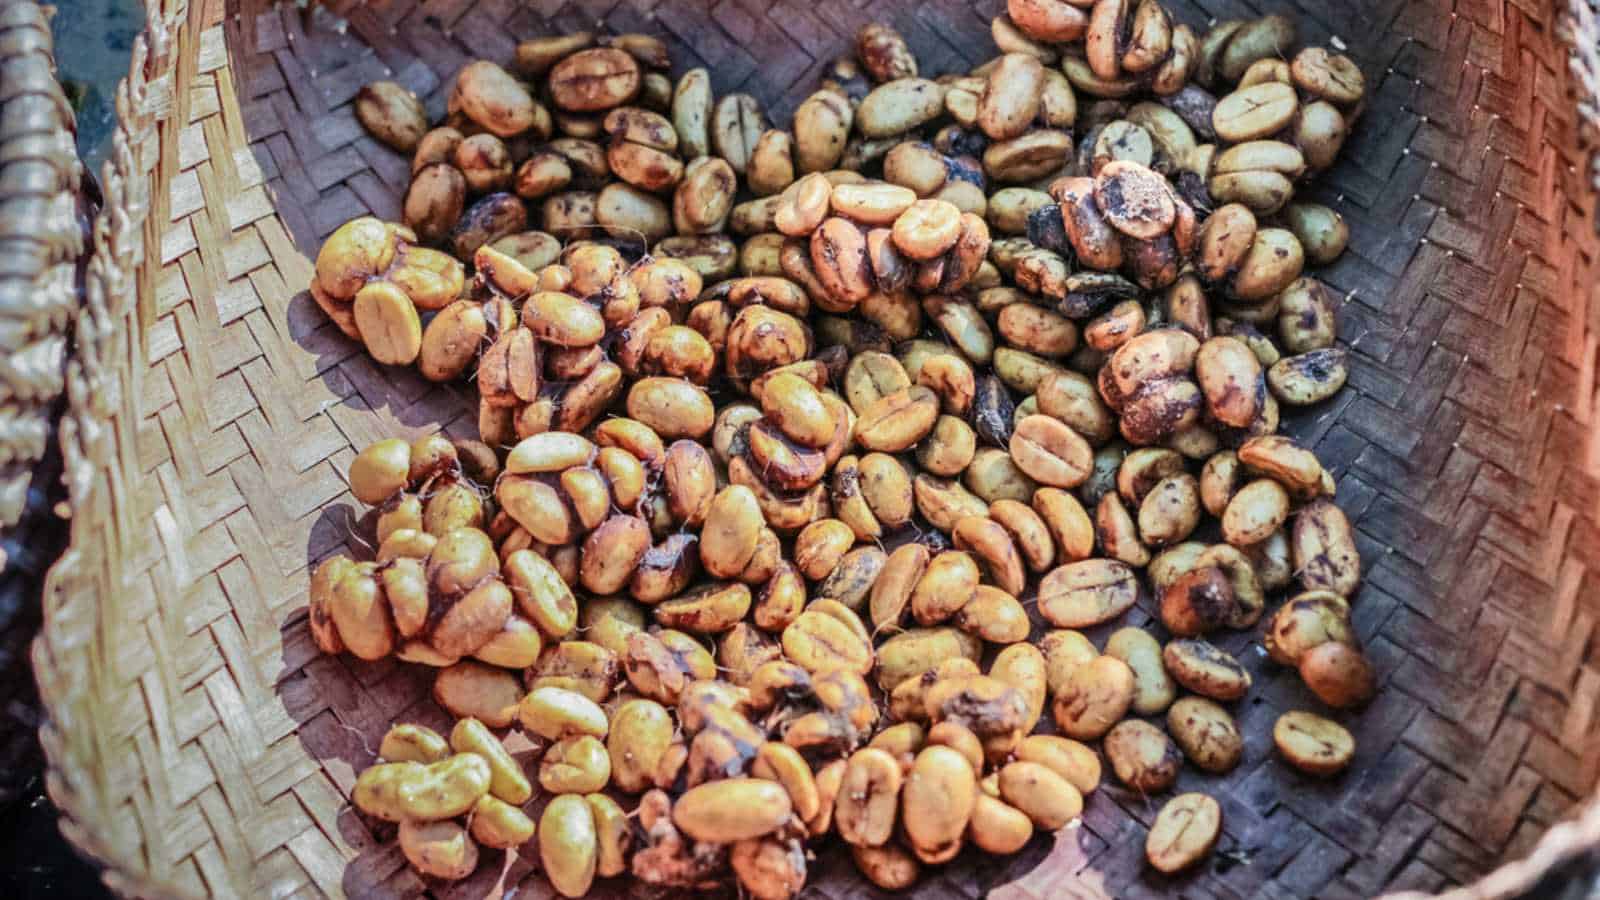 Digested Coffee beans from Luwak (civet cat poop) : Process of Luwak Coffee
